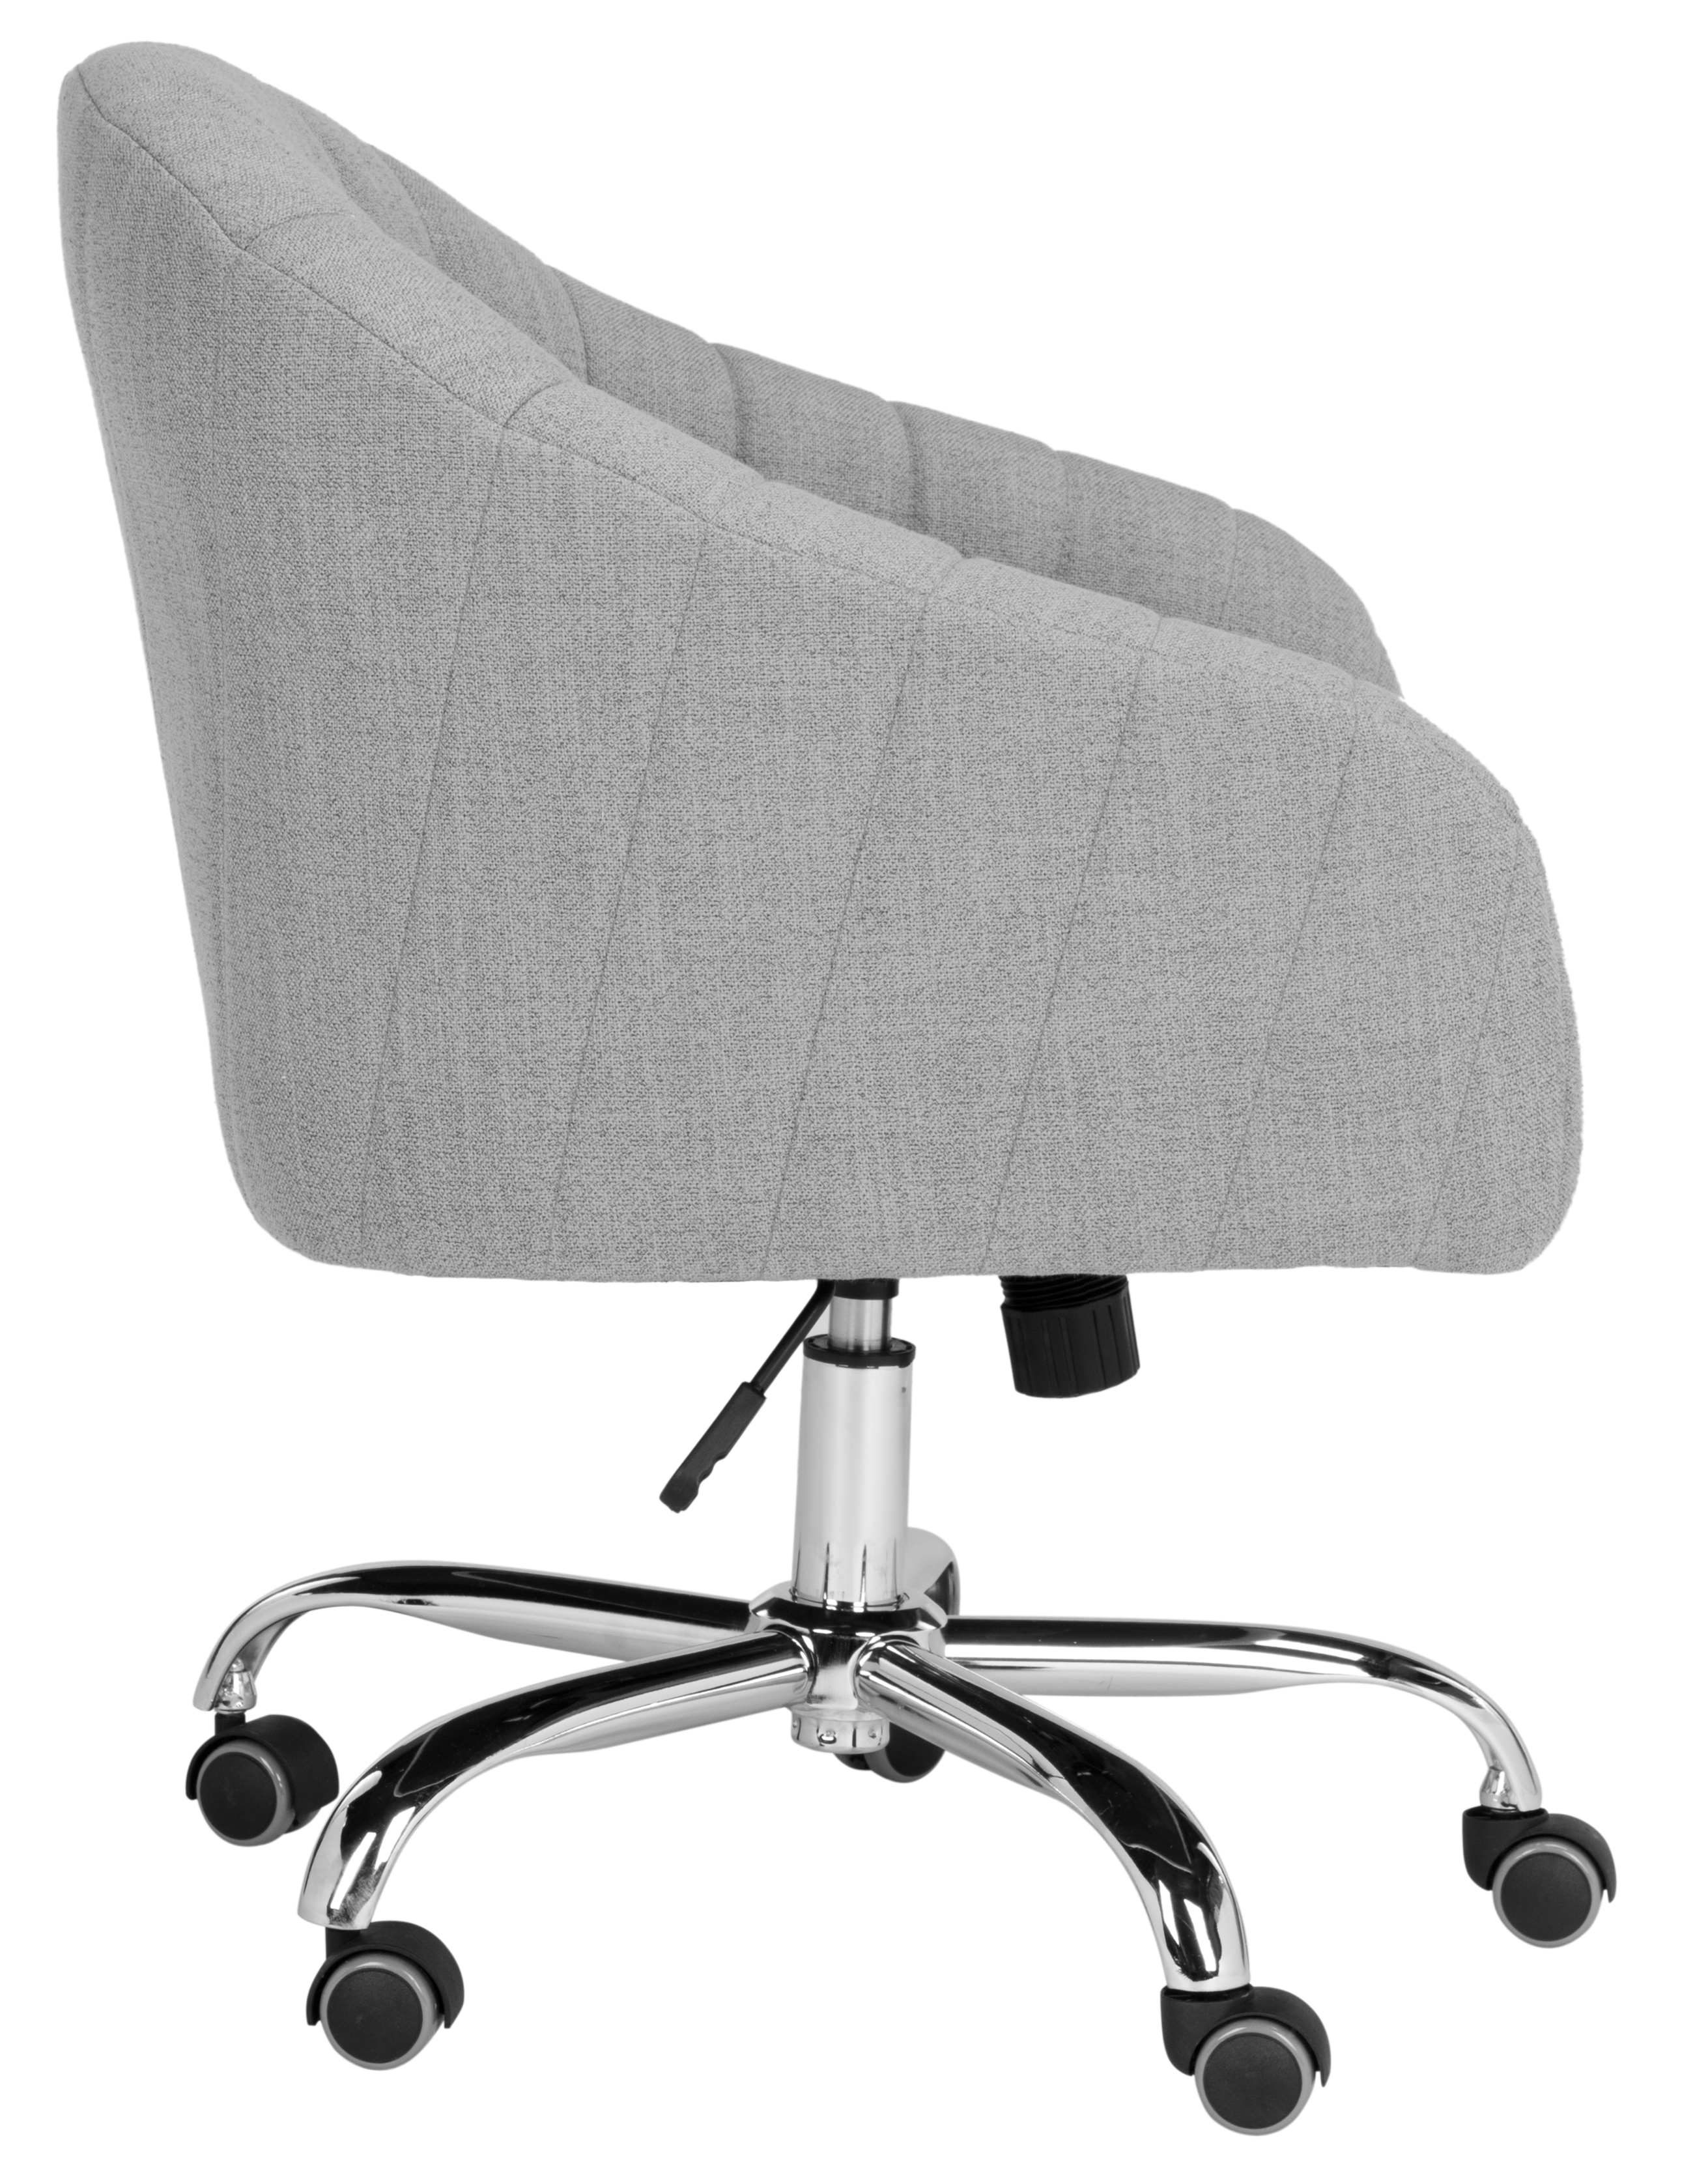 Themis Linen Chrome Leg Swivel Office Chair - Grey/Chrome - Arlo Home - Image 2